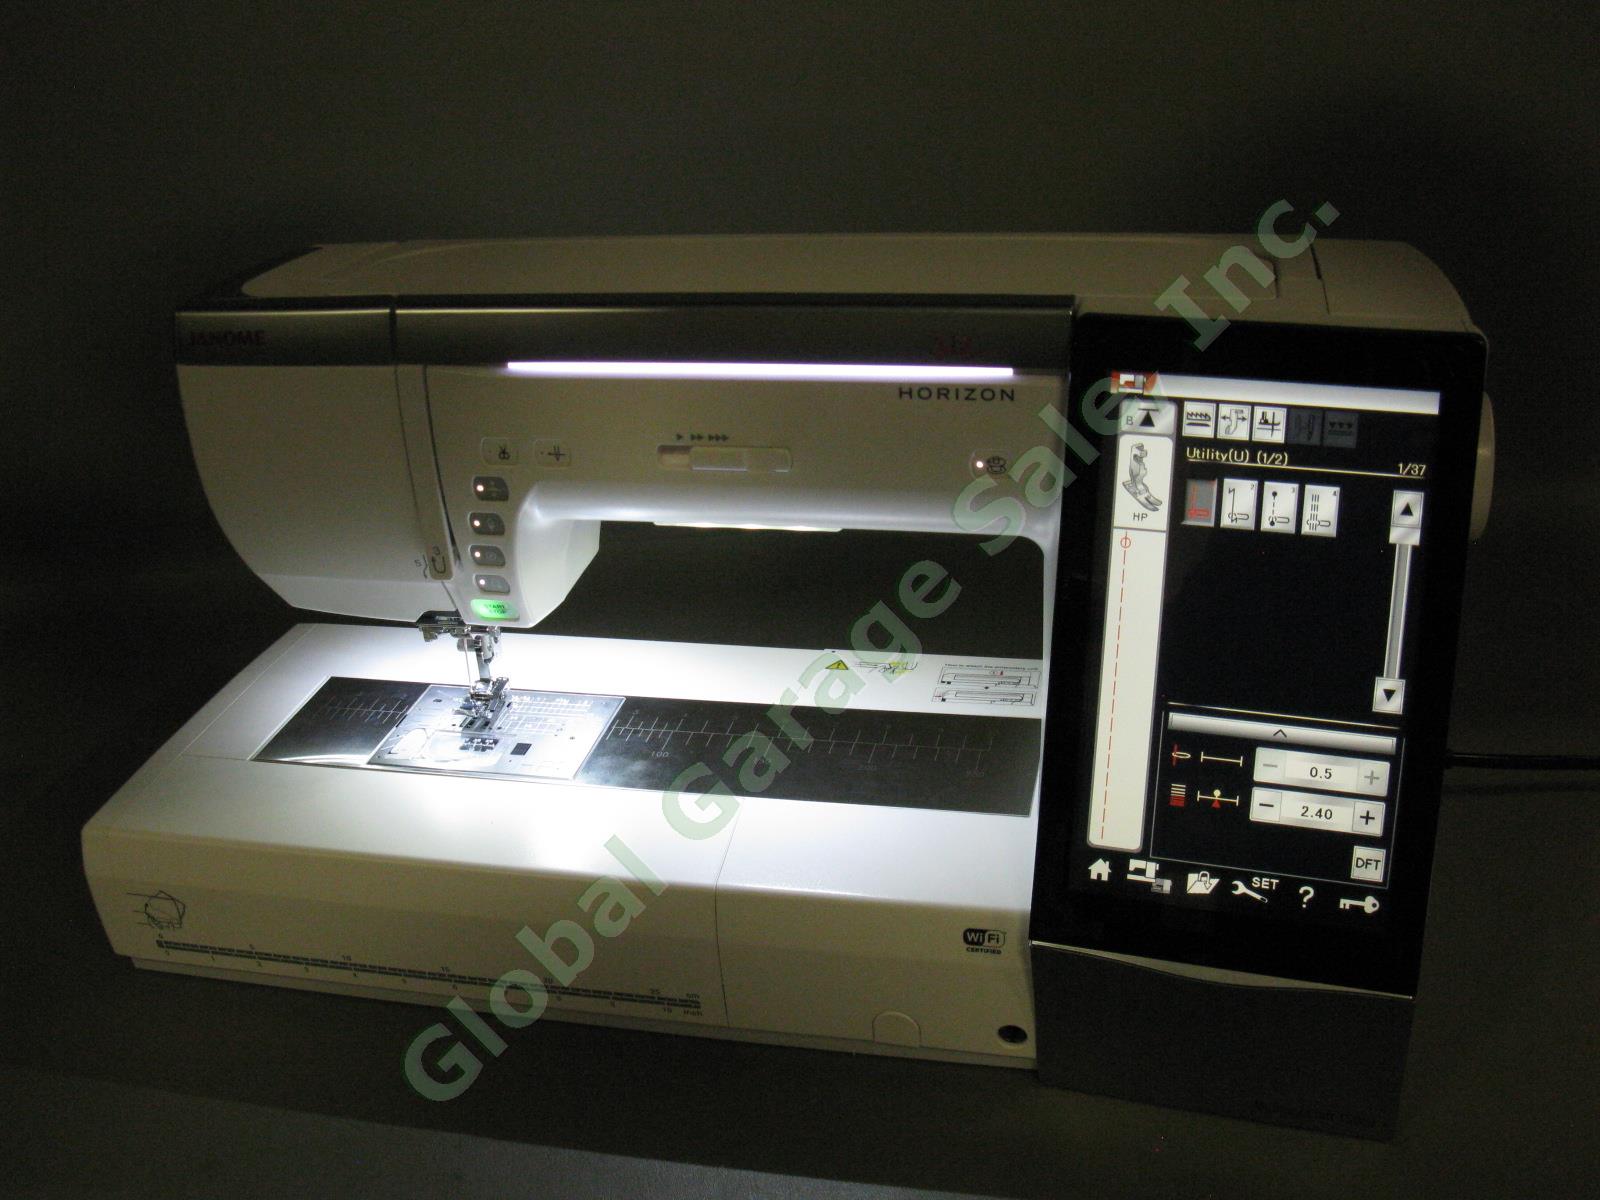 Janome Horizon Memory Craft MC 15000 Sewing Embroidery Machine 2 HOURS! Vers 3.0 4